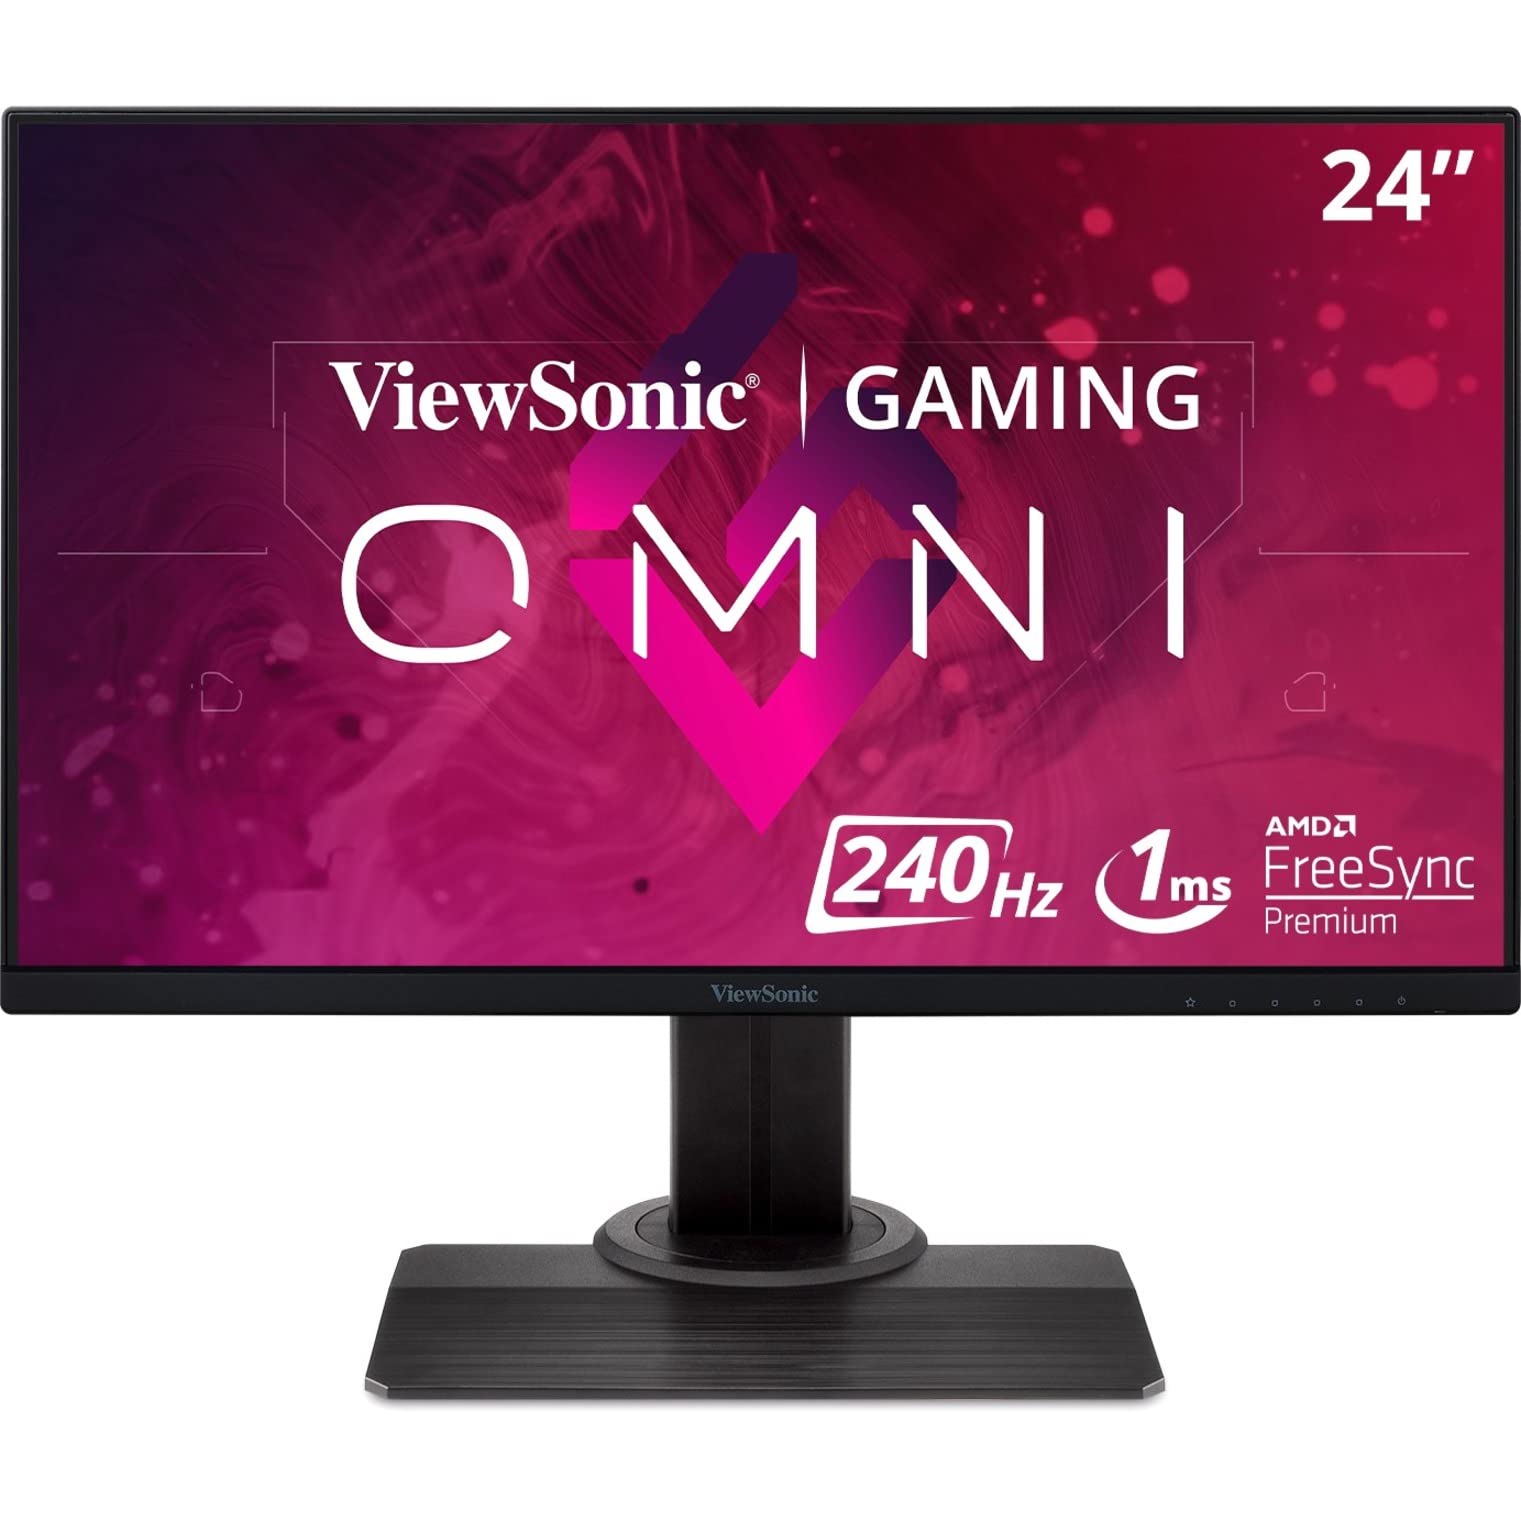 ViewSonic OMNI XG2431 24 Inch 1080p 0.5ms 240Hz Gaming Monitor with AMD FreeSync Premium, Advanced Ergonomics, Eye Care, HDMI and DisplayPort for Esports,Black